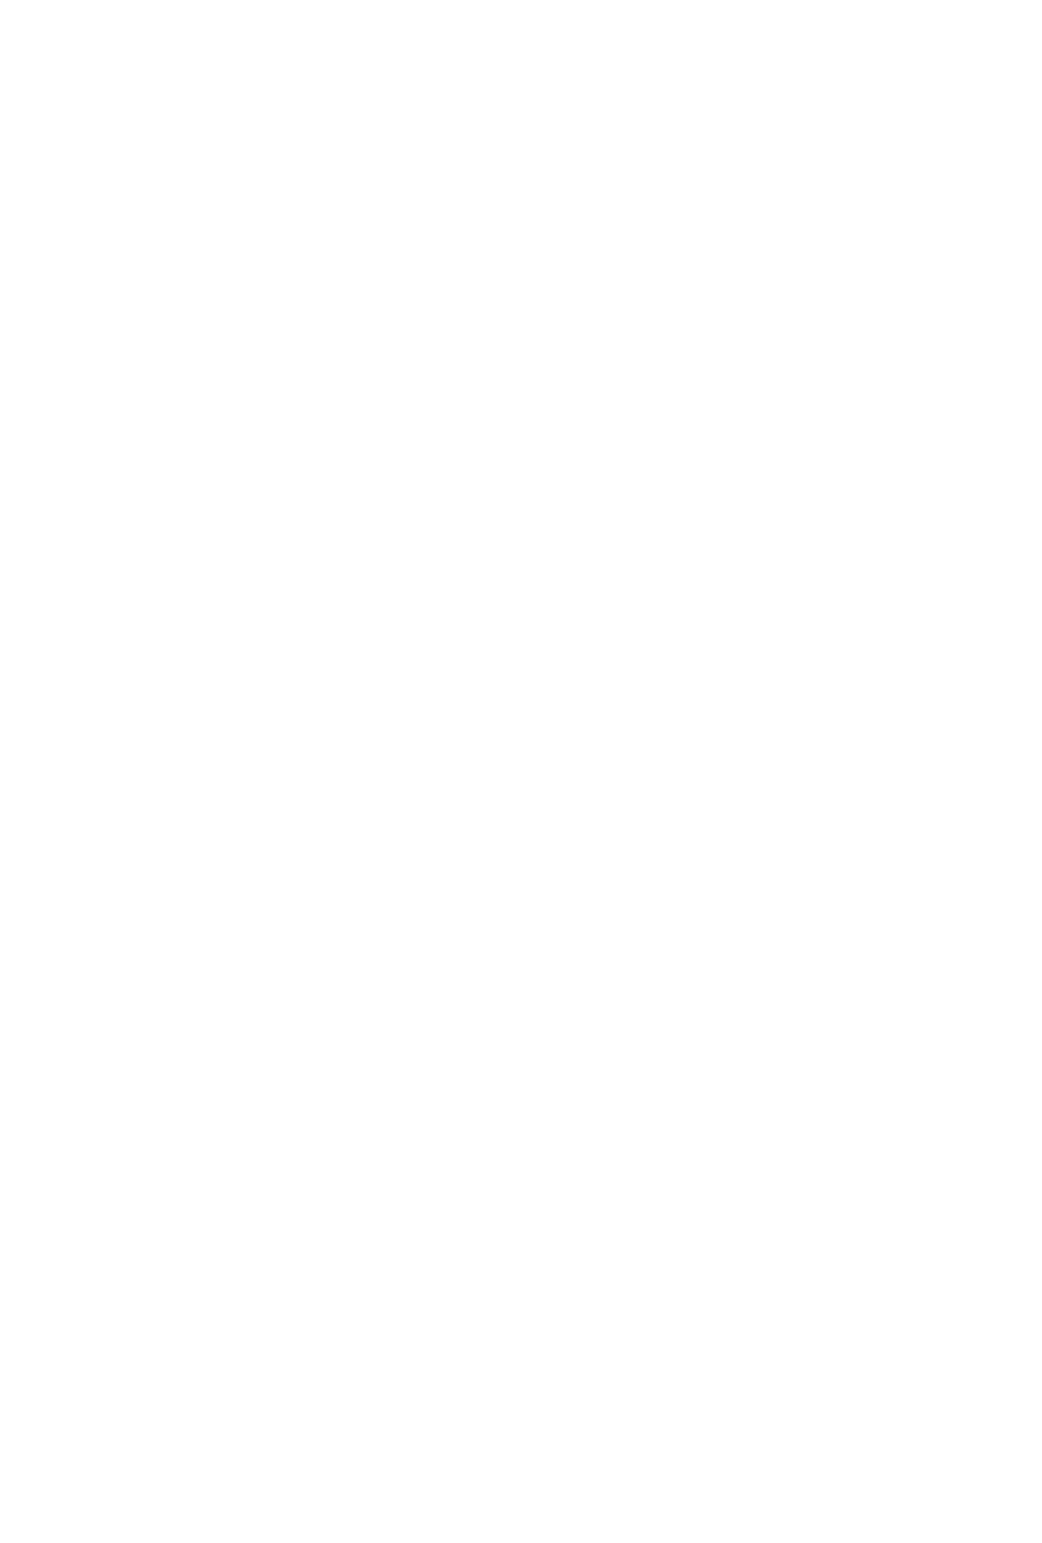 Swiggy logo pour fonds sombres (PNG transparent)